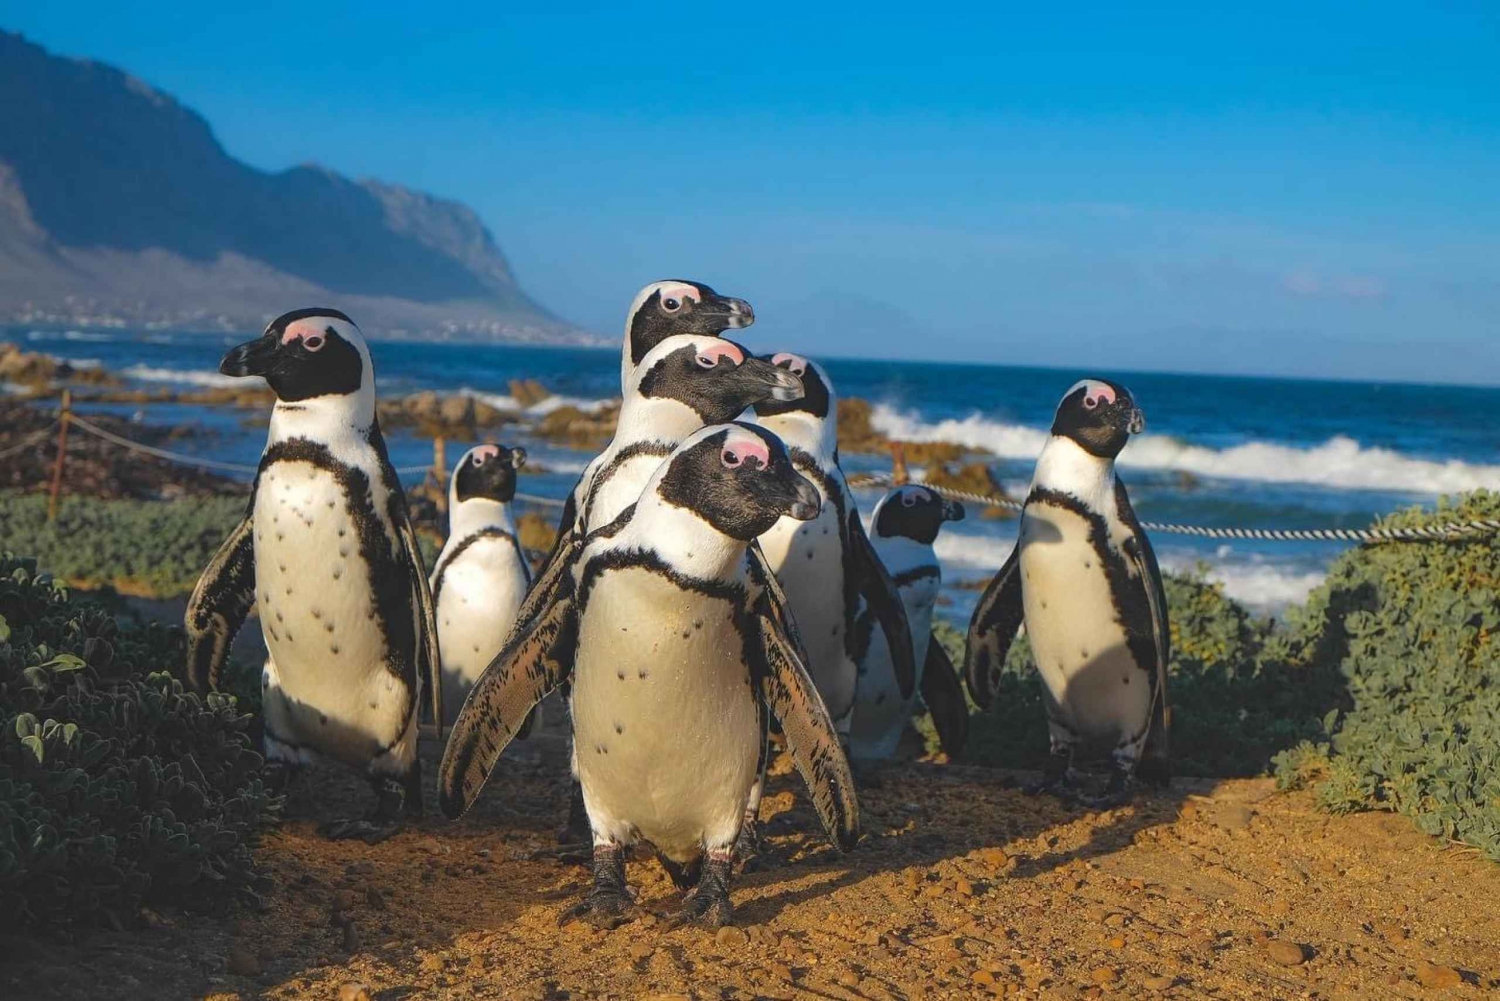 Nade com pinguins na colônia de pinguins de Boulders Beach